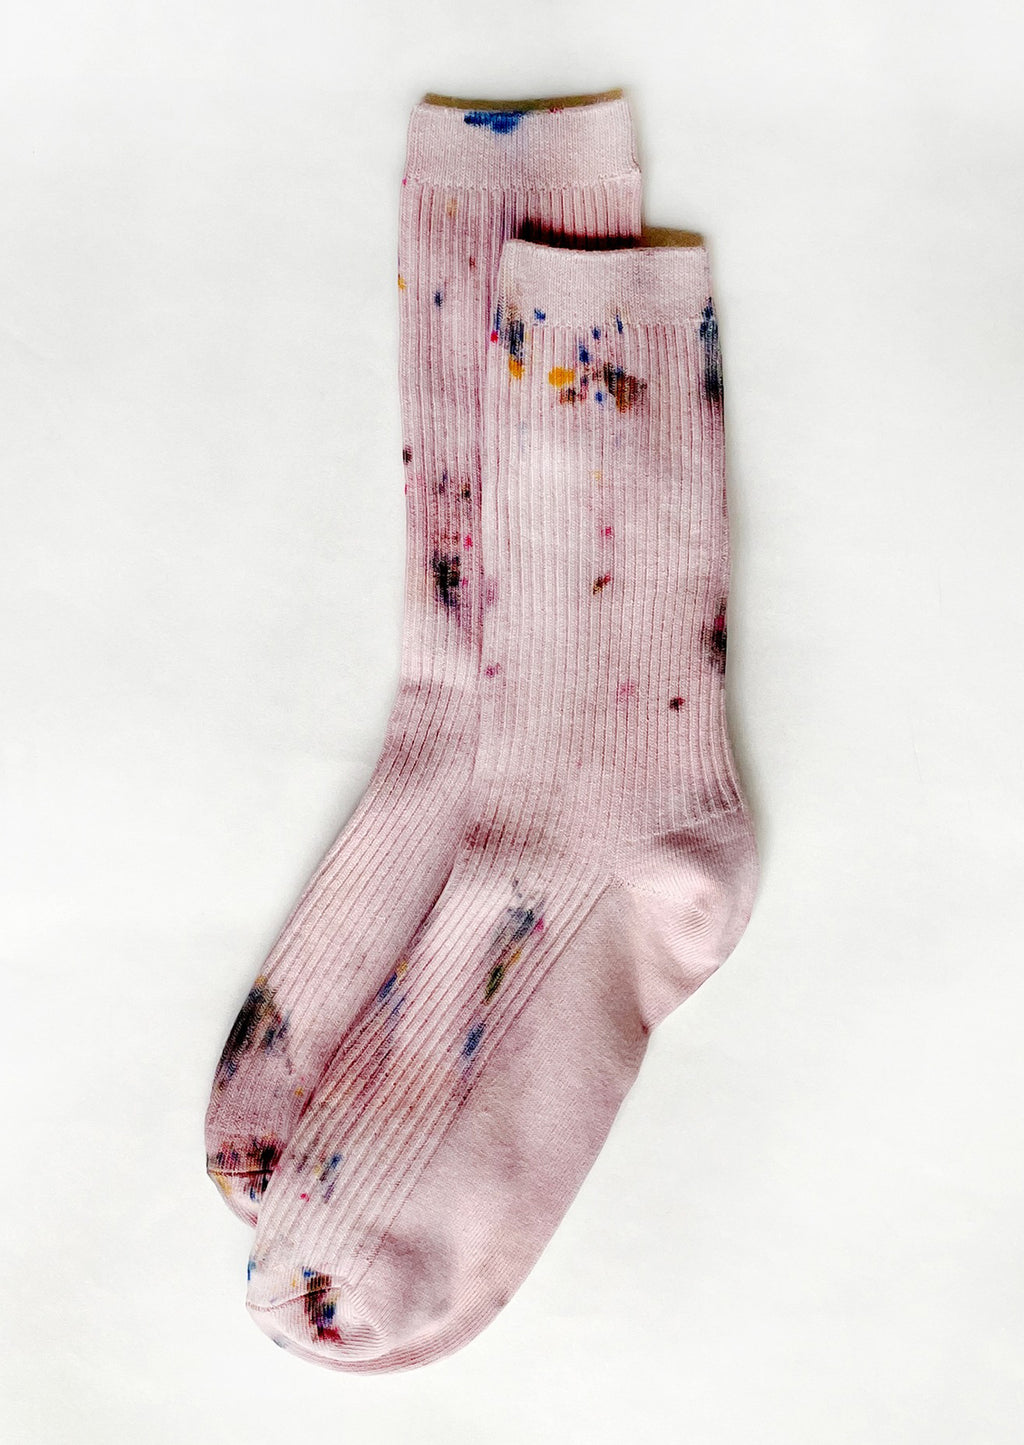 Maplewood: A pair of tie dye socks in dusty pink color.